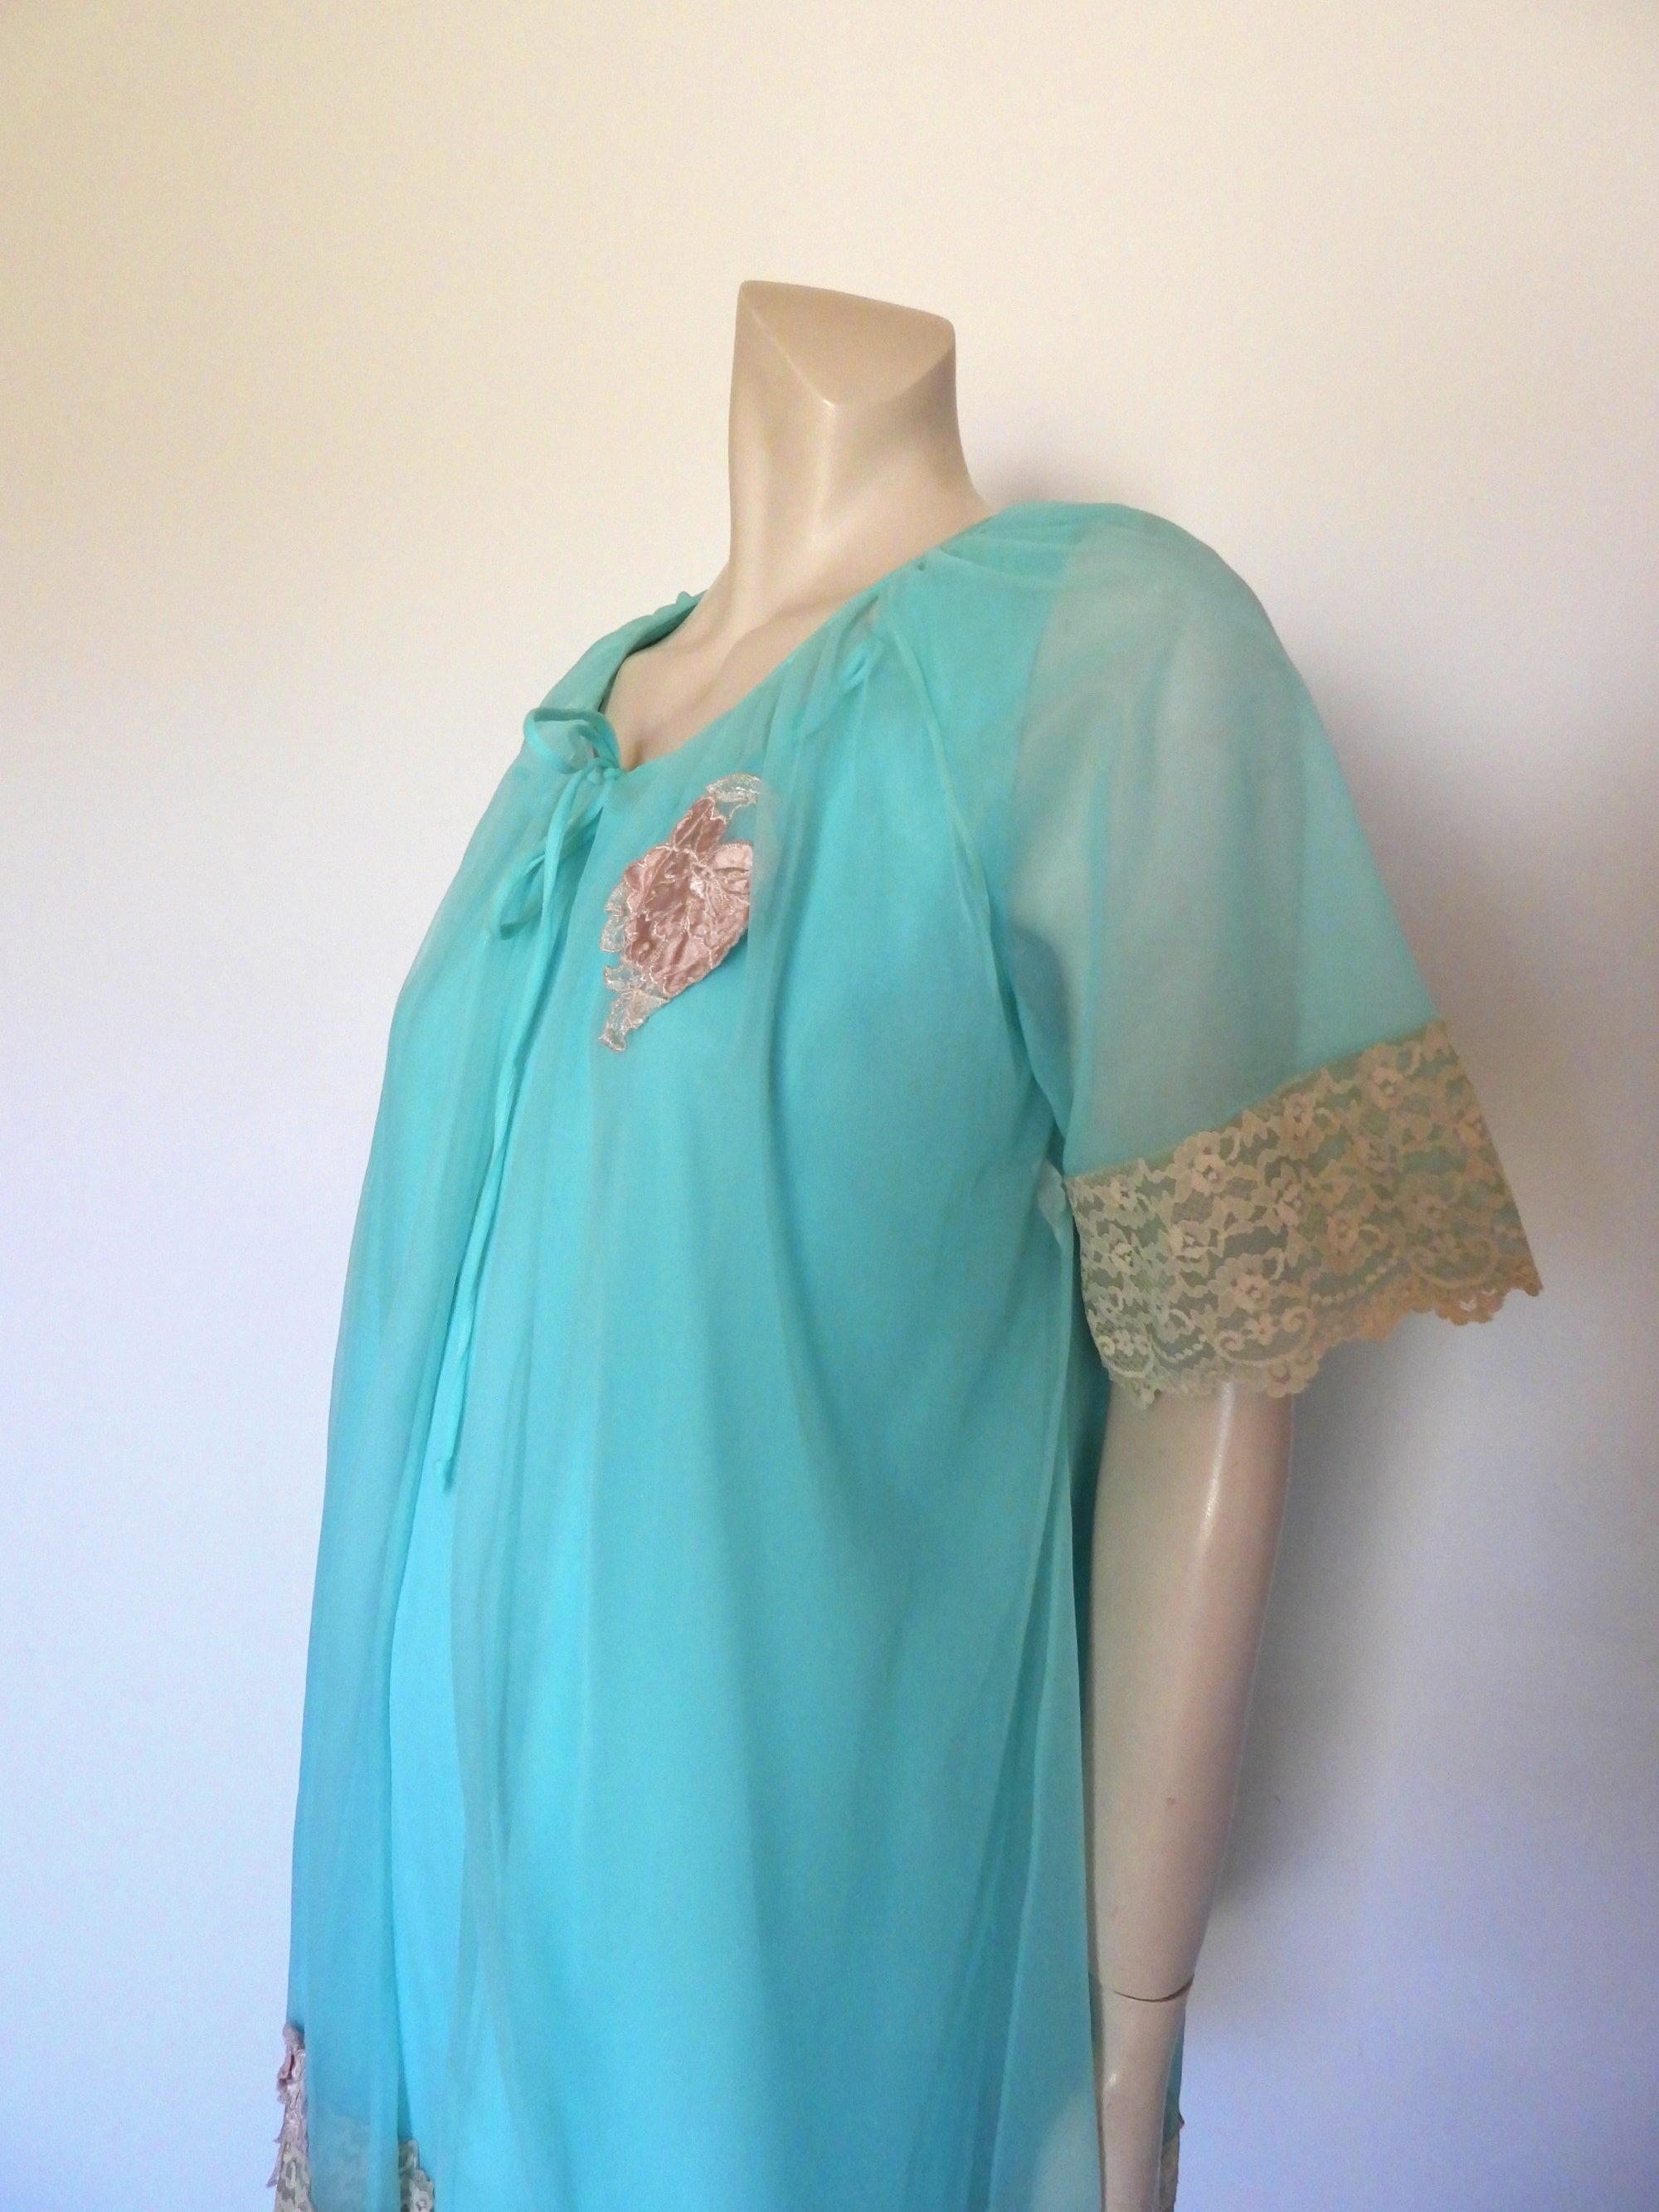 1960s vintage aqua nylon mini nightgown and robe set Medium